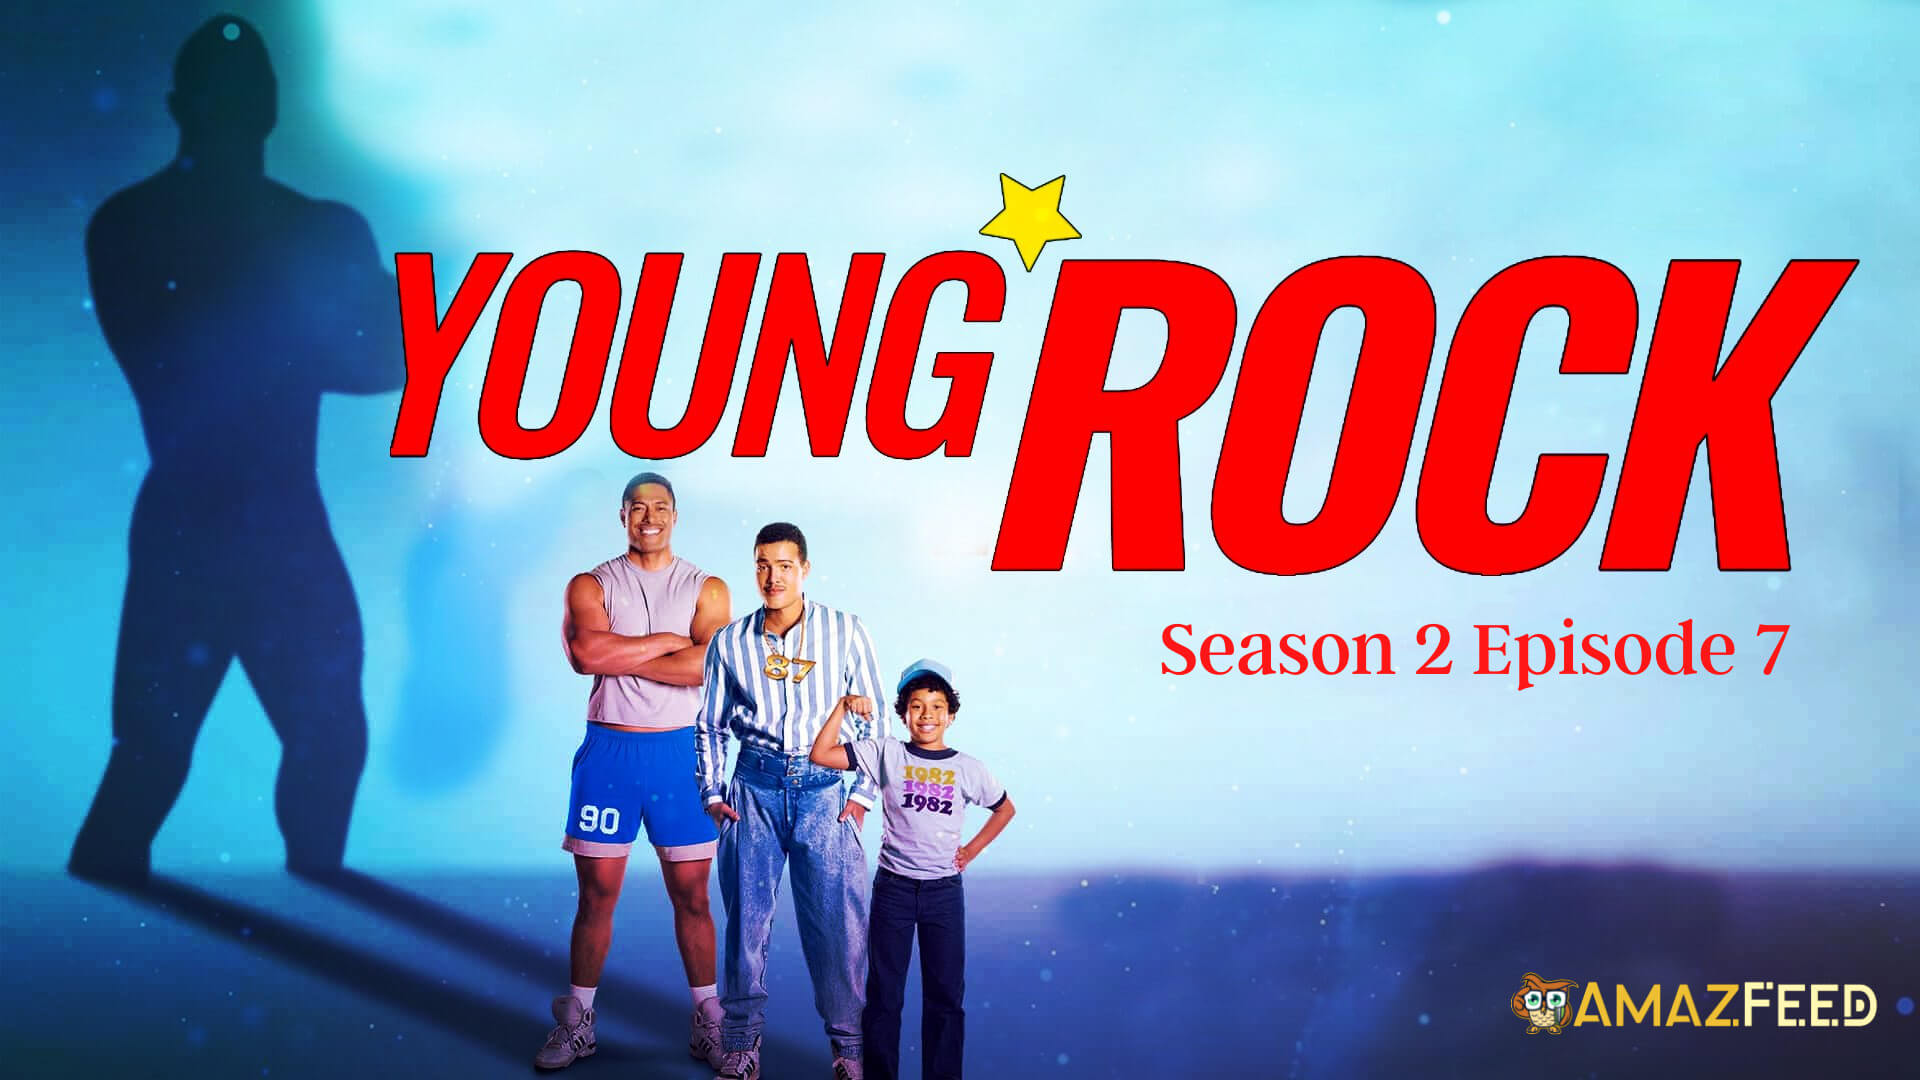 Young Rock Season 2 Episode 7 Release Date